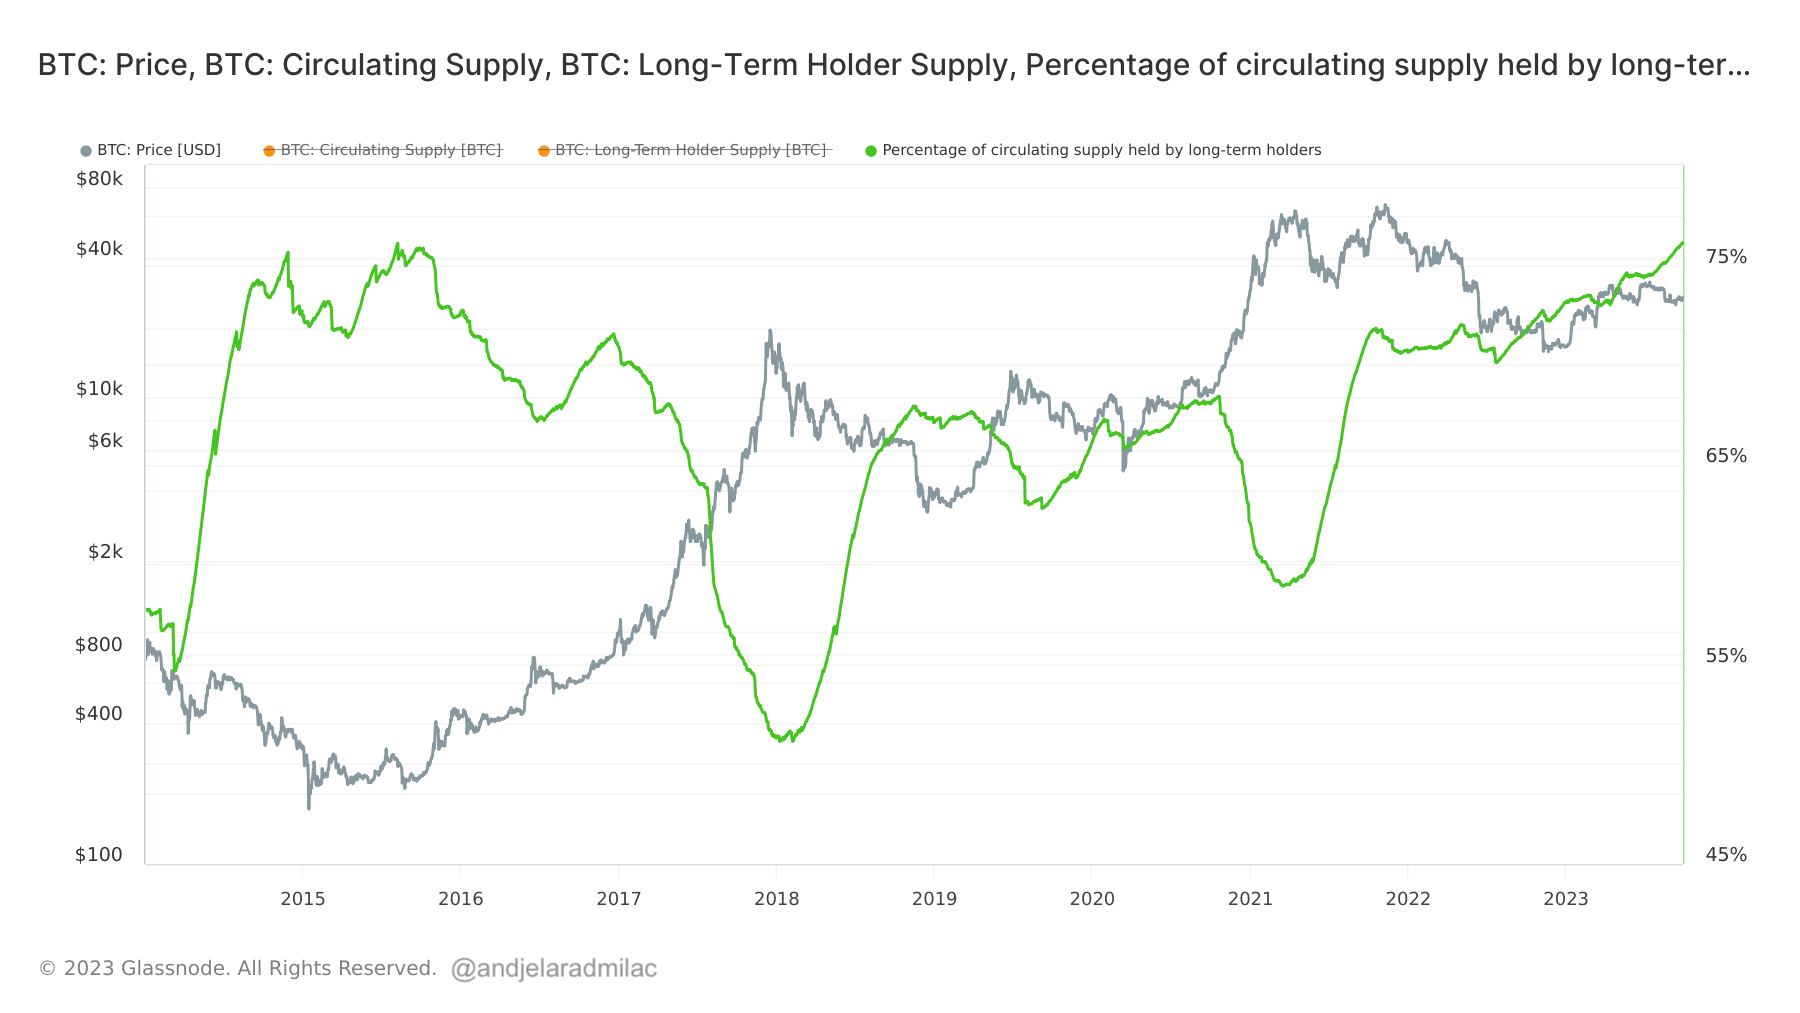 long-term holders supply percentage circulating supply 2014 2023